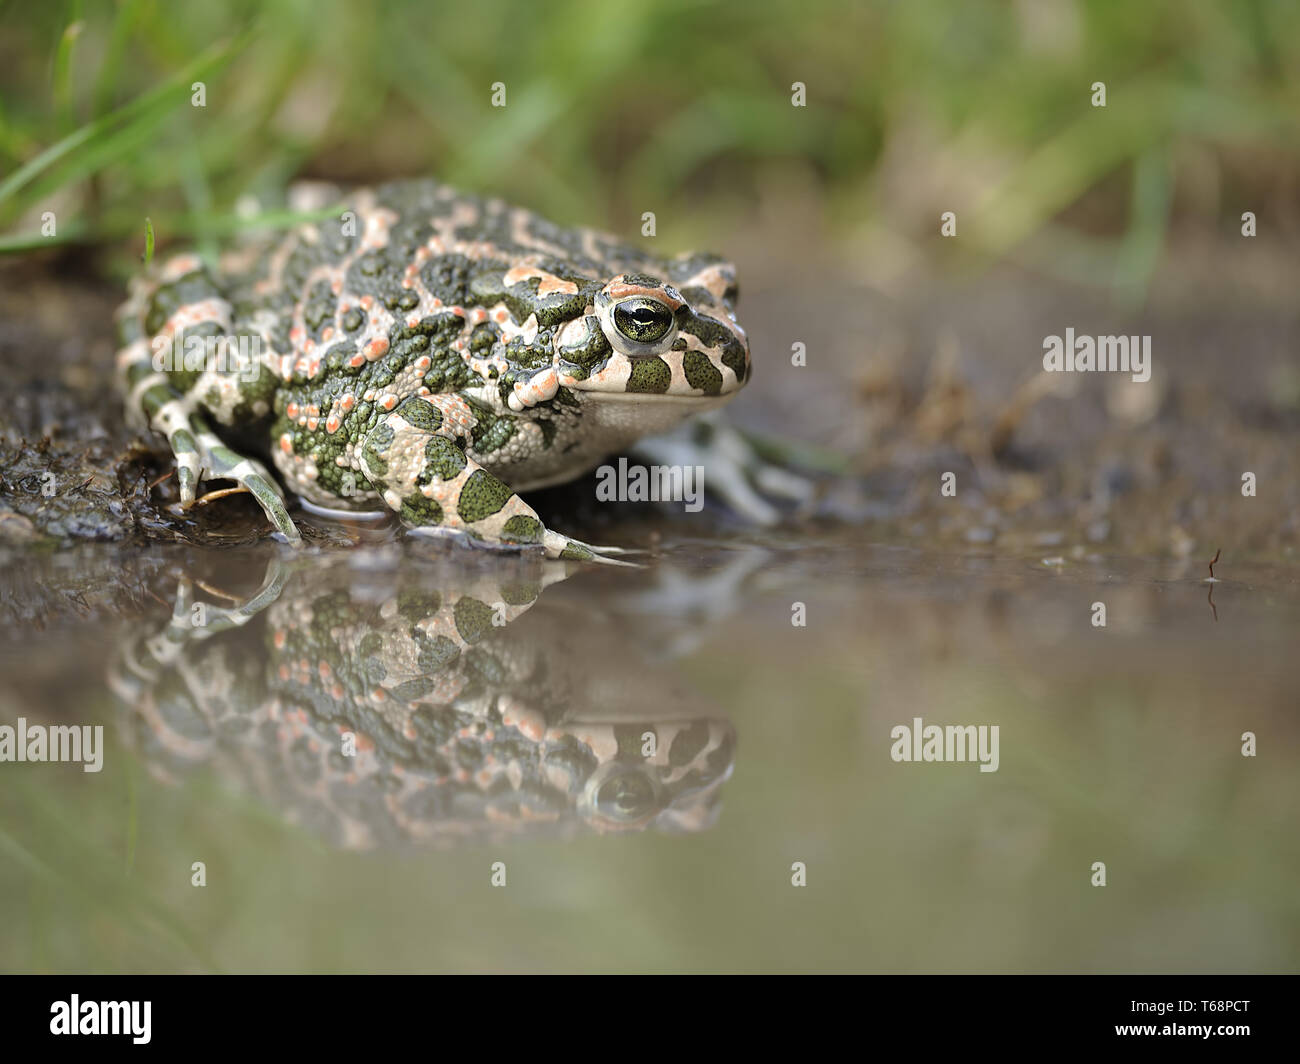 European green toad, Pseudepidalea viridis, Bufo viridis, Bufotes viridis, East Europe Stock Photo